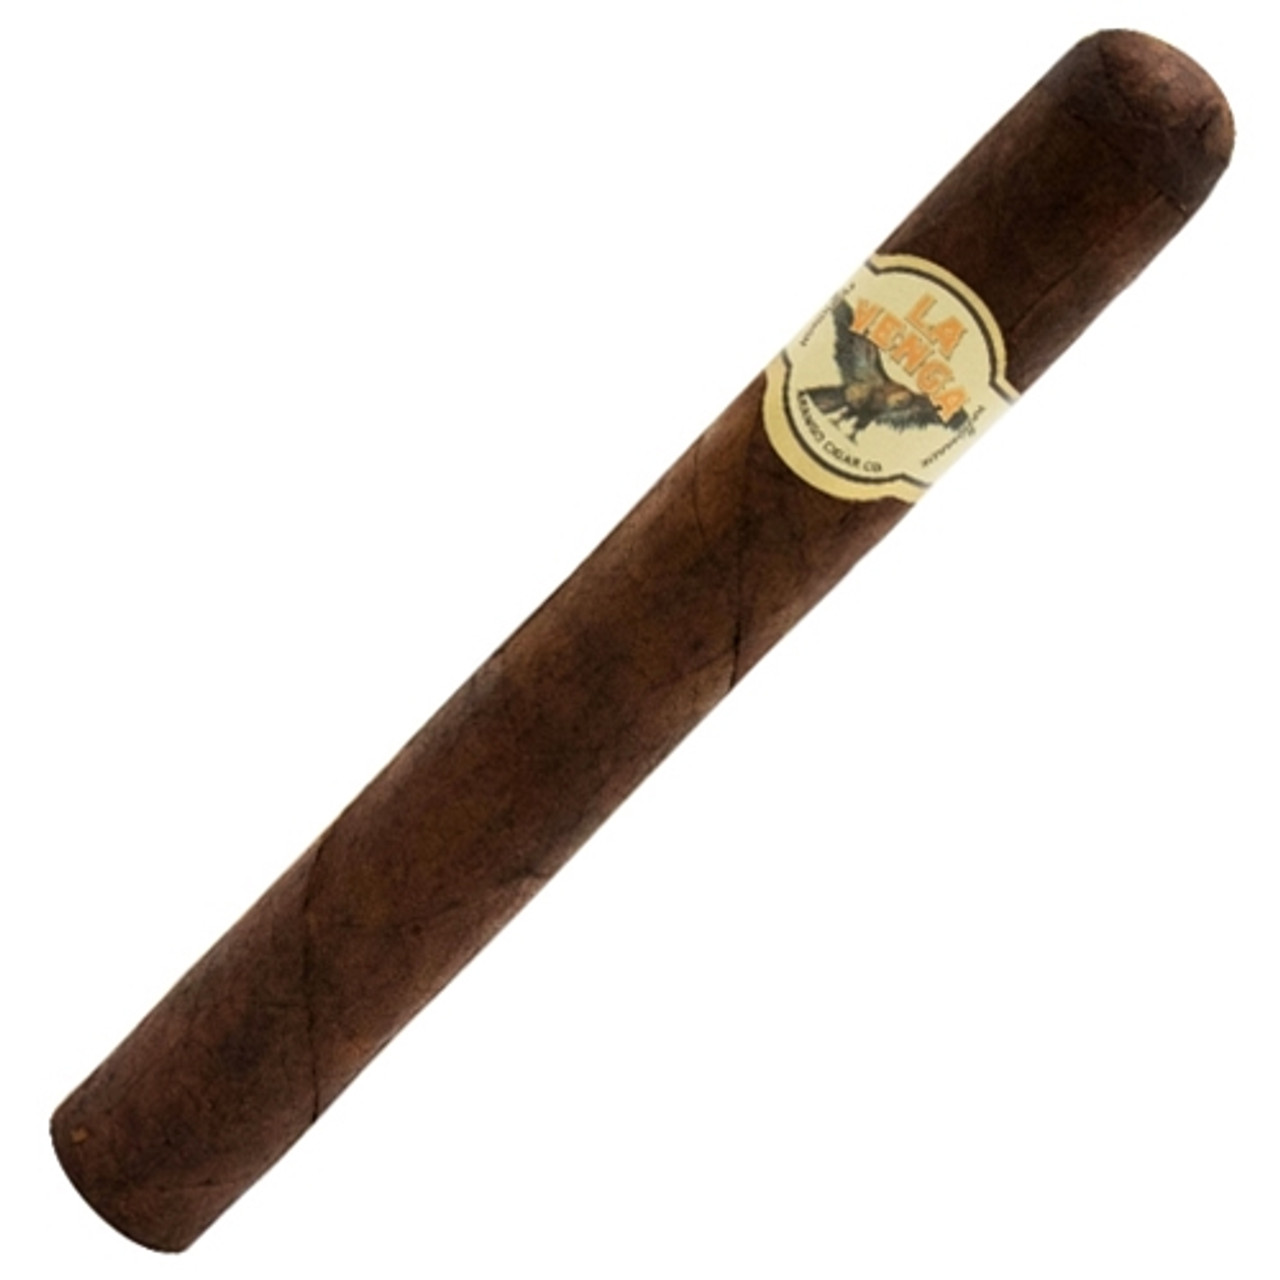 La Venga No. 60 Maduro Cigars - 6.25 x 44 Single